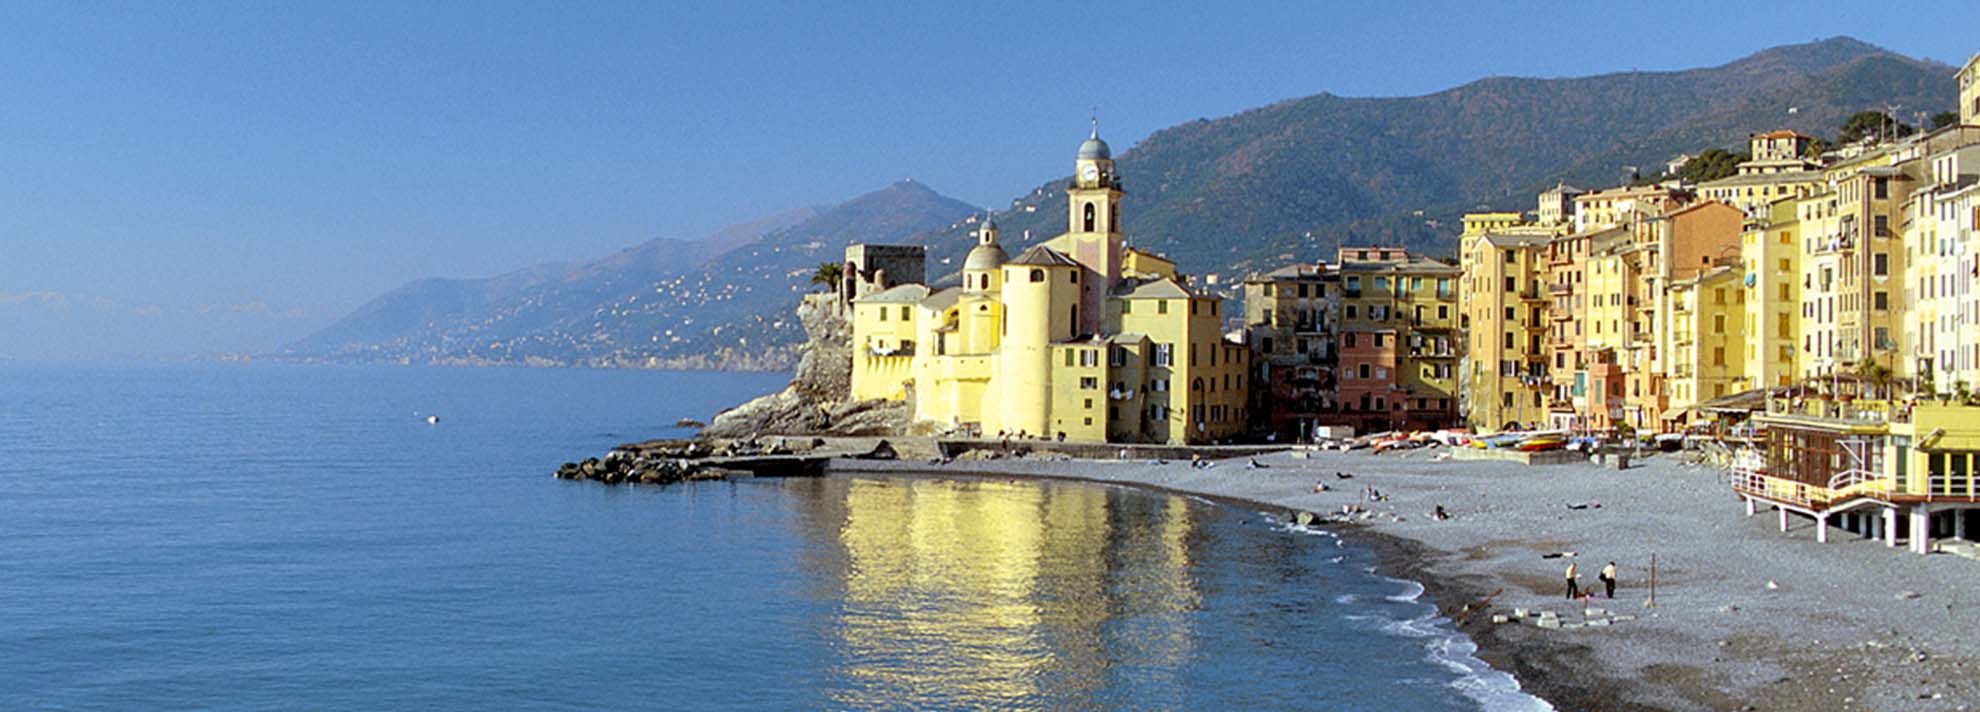 Paradise Gulf - Camogli localita La Mia Liguria testata